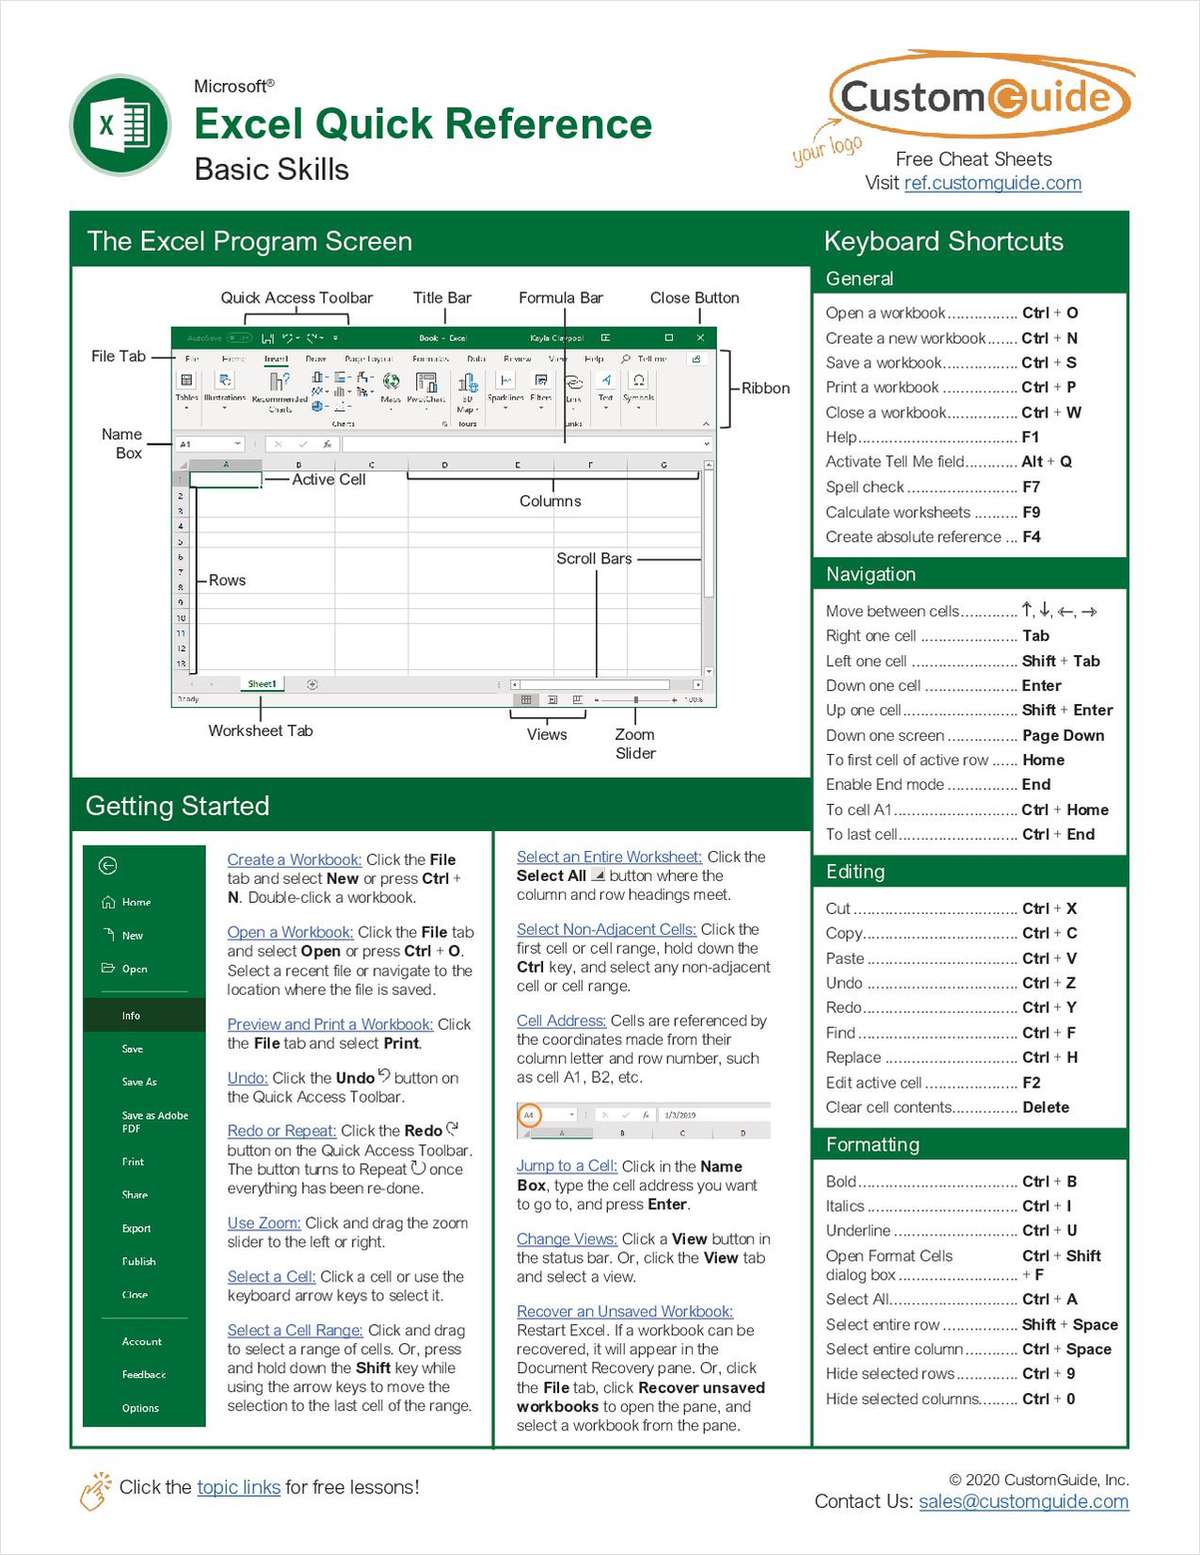 imagecast precinct tabulator reference guide